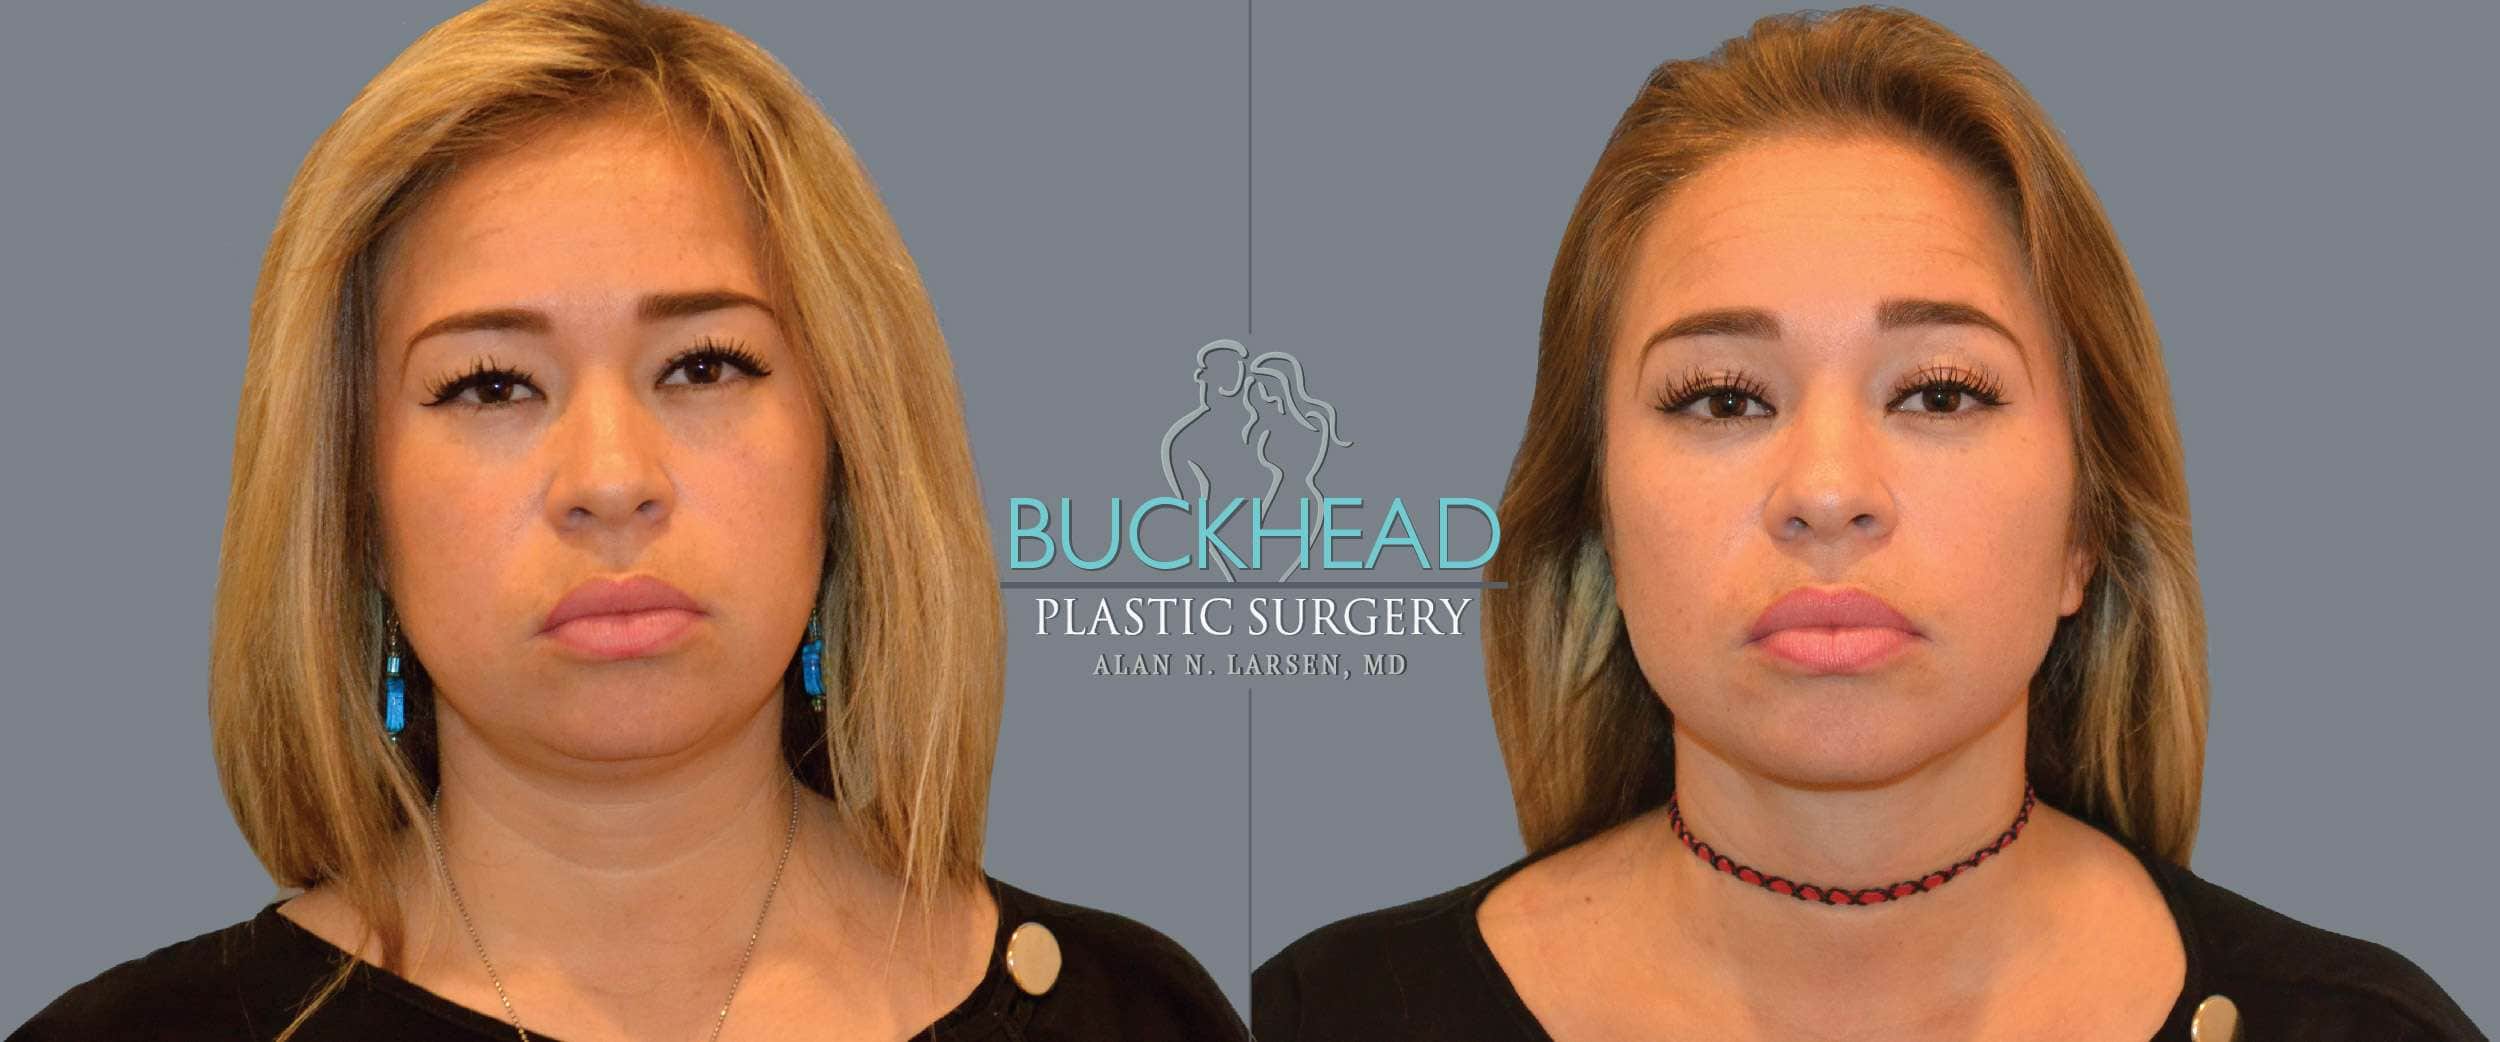 Before and After Photo Gallery | Liposuction - Neck | Buckhead Plastic Surgery | Alan N. Larsen, MD | Board-Certified Plastic Surgeon | Atlanta GA